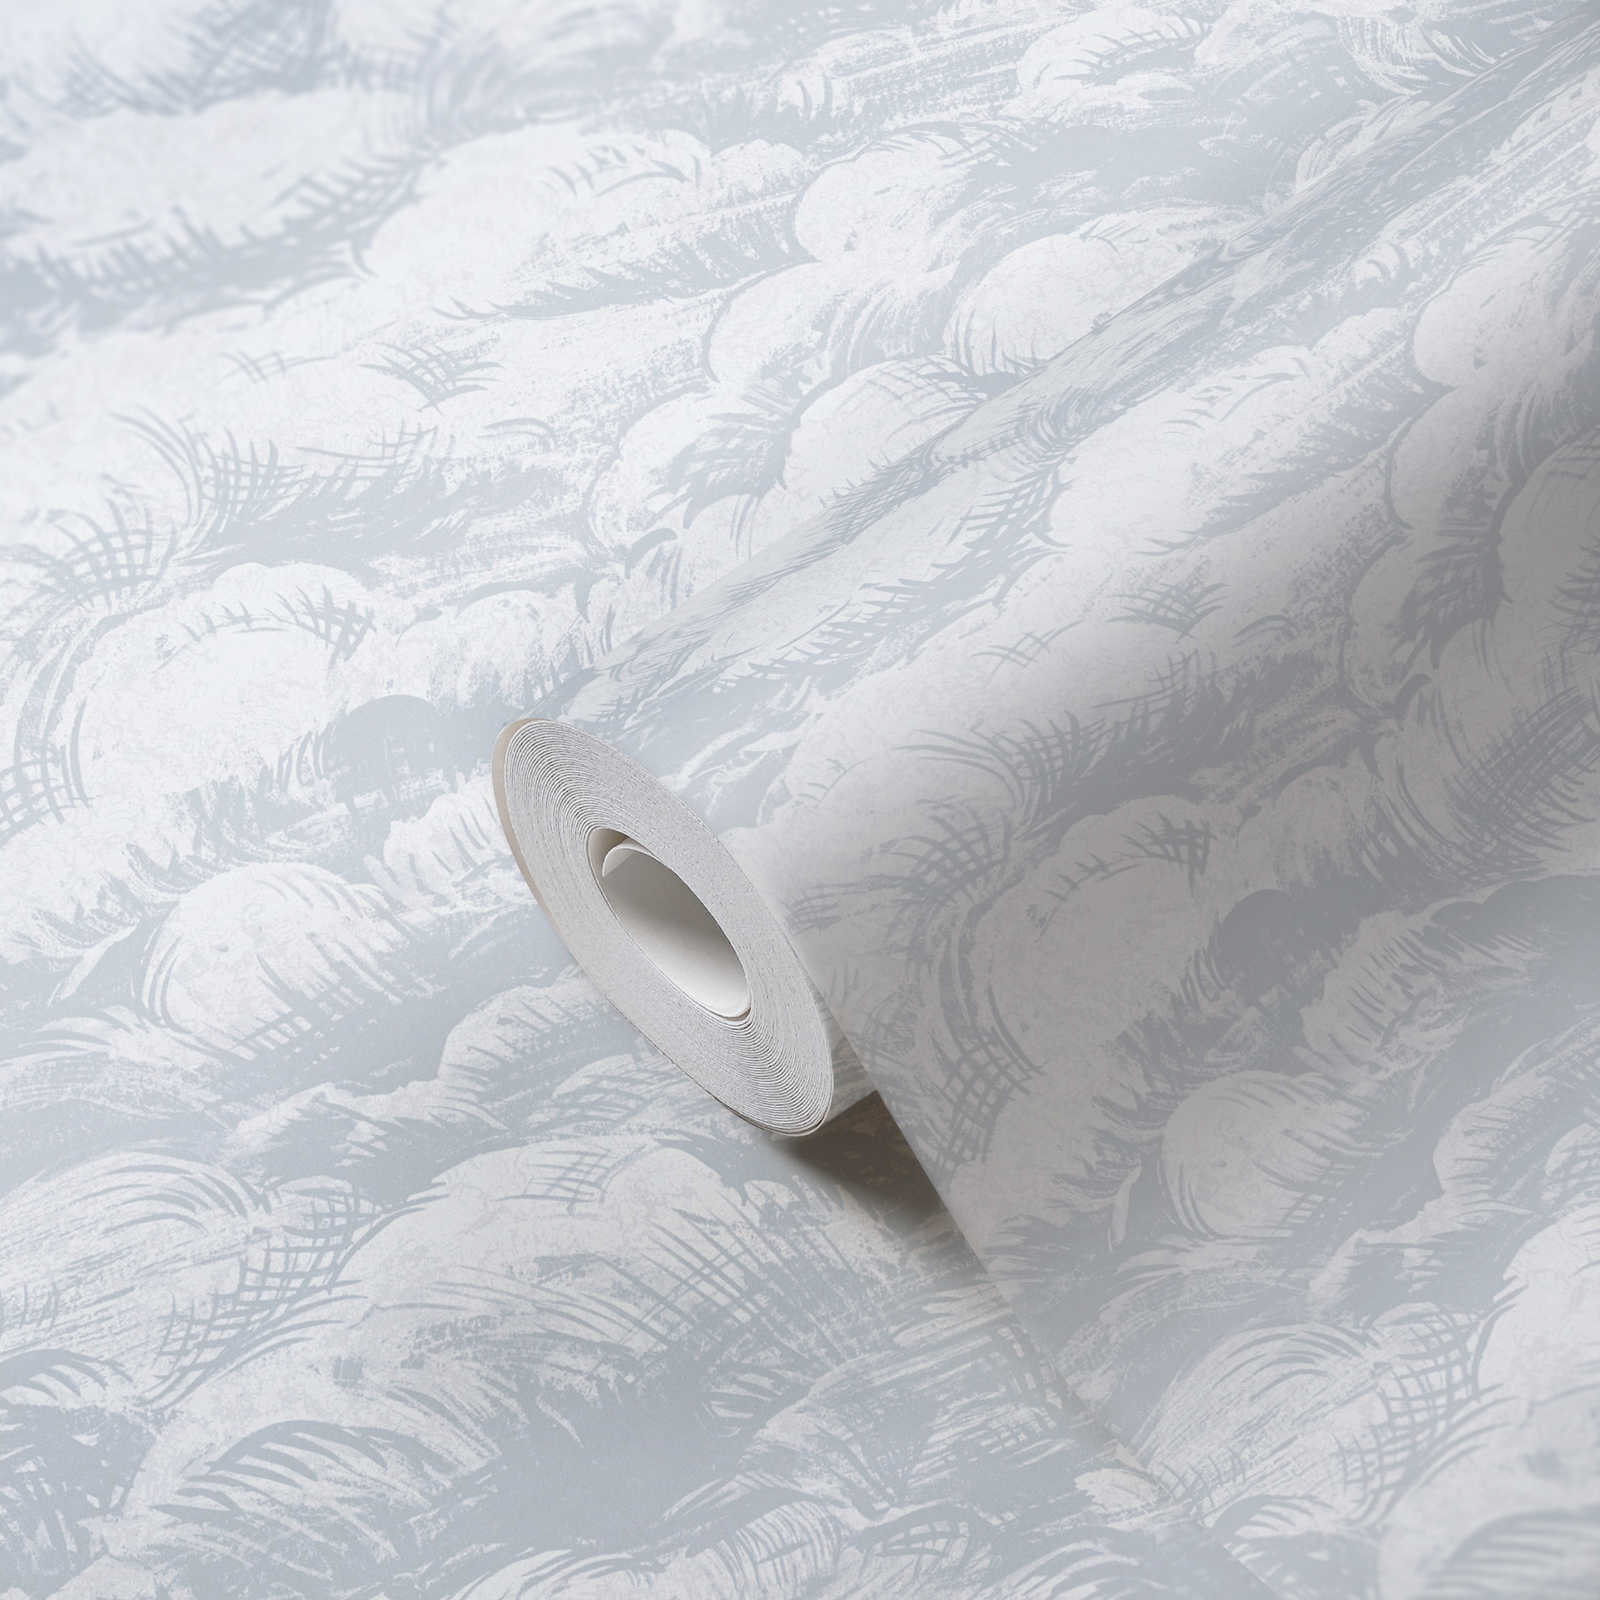             Non-woven wallpaper light grey cloud motif in vintage style - grey, white
        